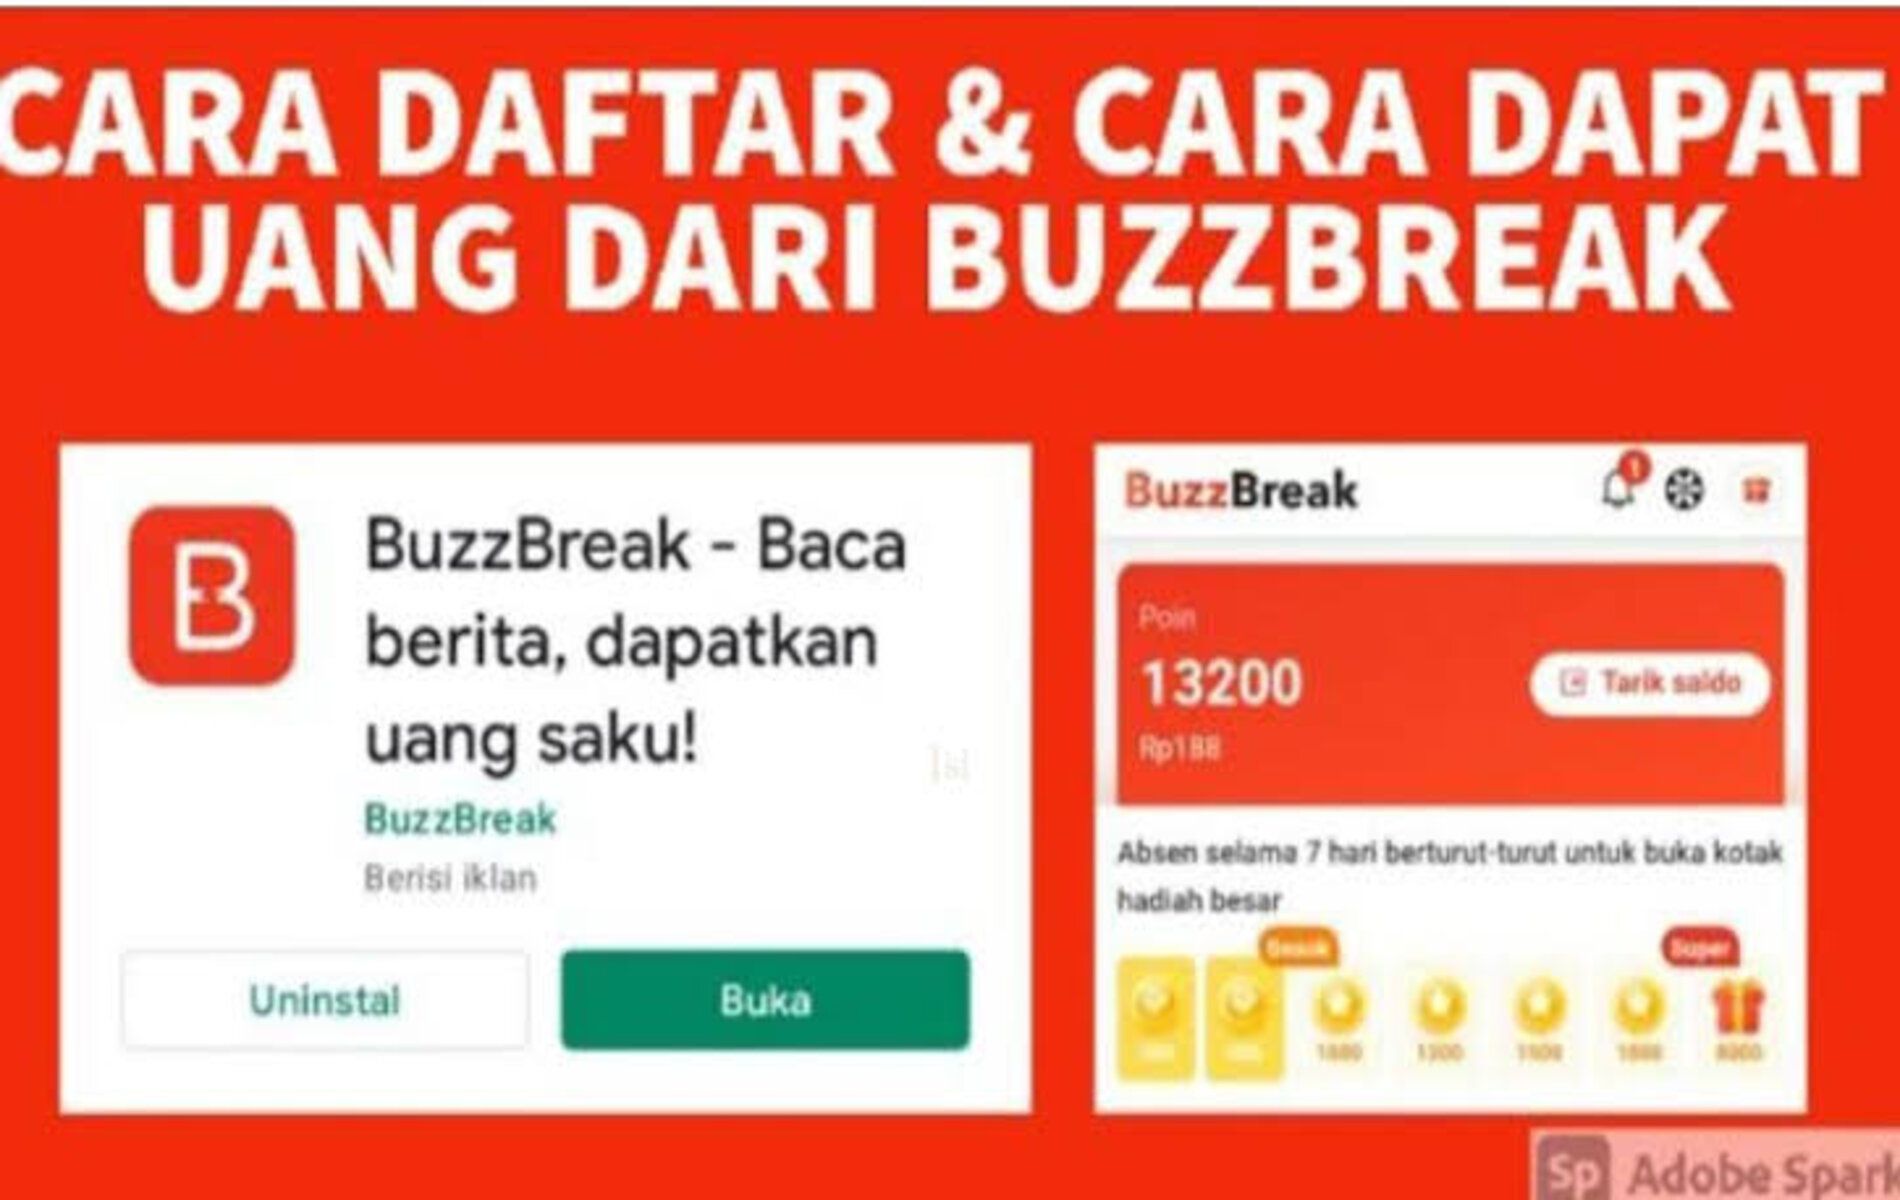 Buzzbreak aplikasi penghasil saldo dana gratis 